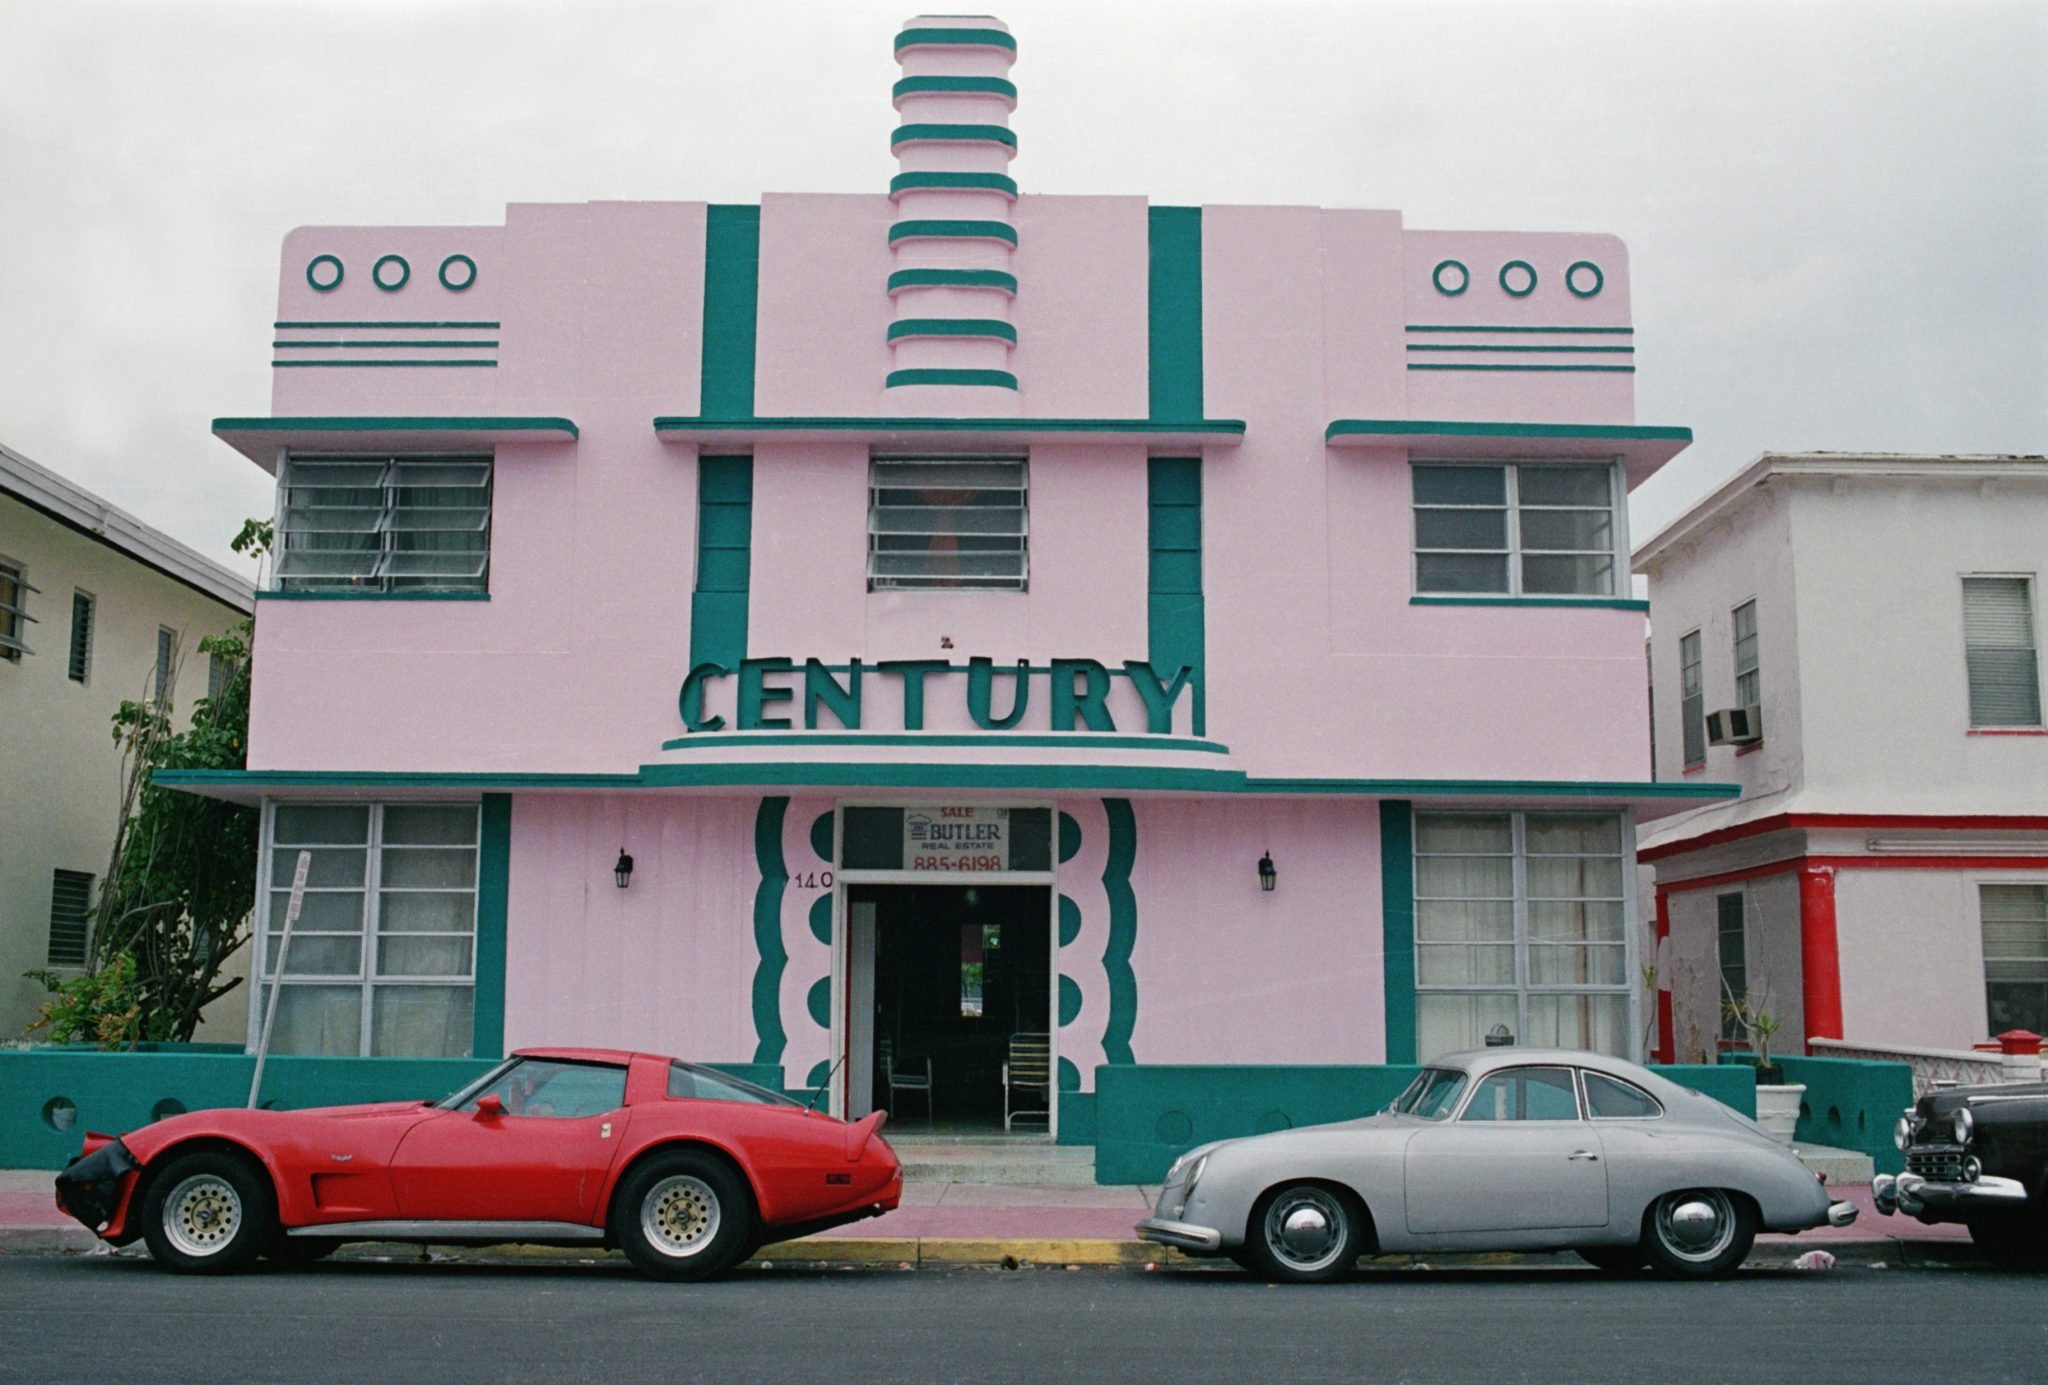 Check Out These Ten Nostalgic Photos Of Miami During The '80s